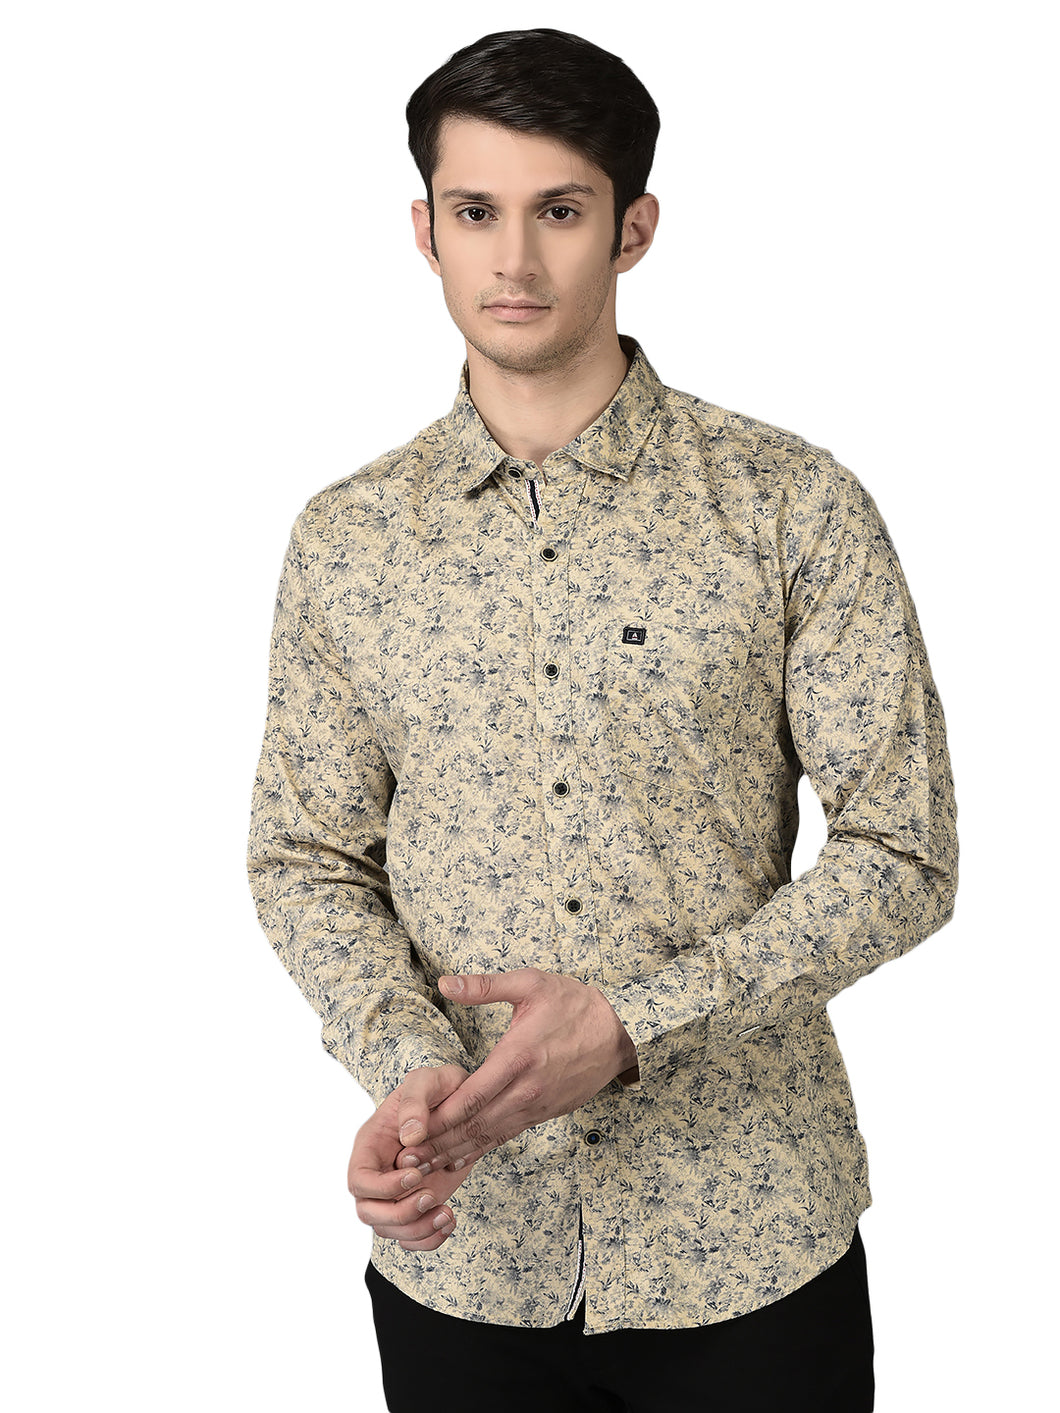 CANOE MEN Casual Shirt Beige Color Cotton Fabric Button Closure Printed